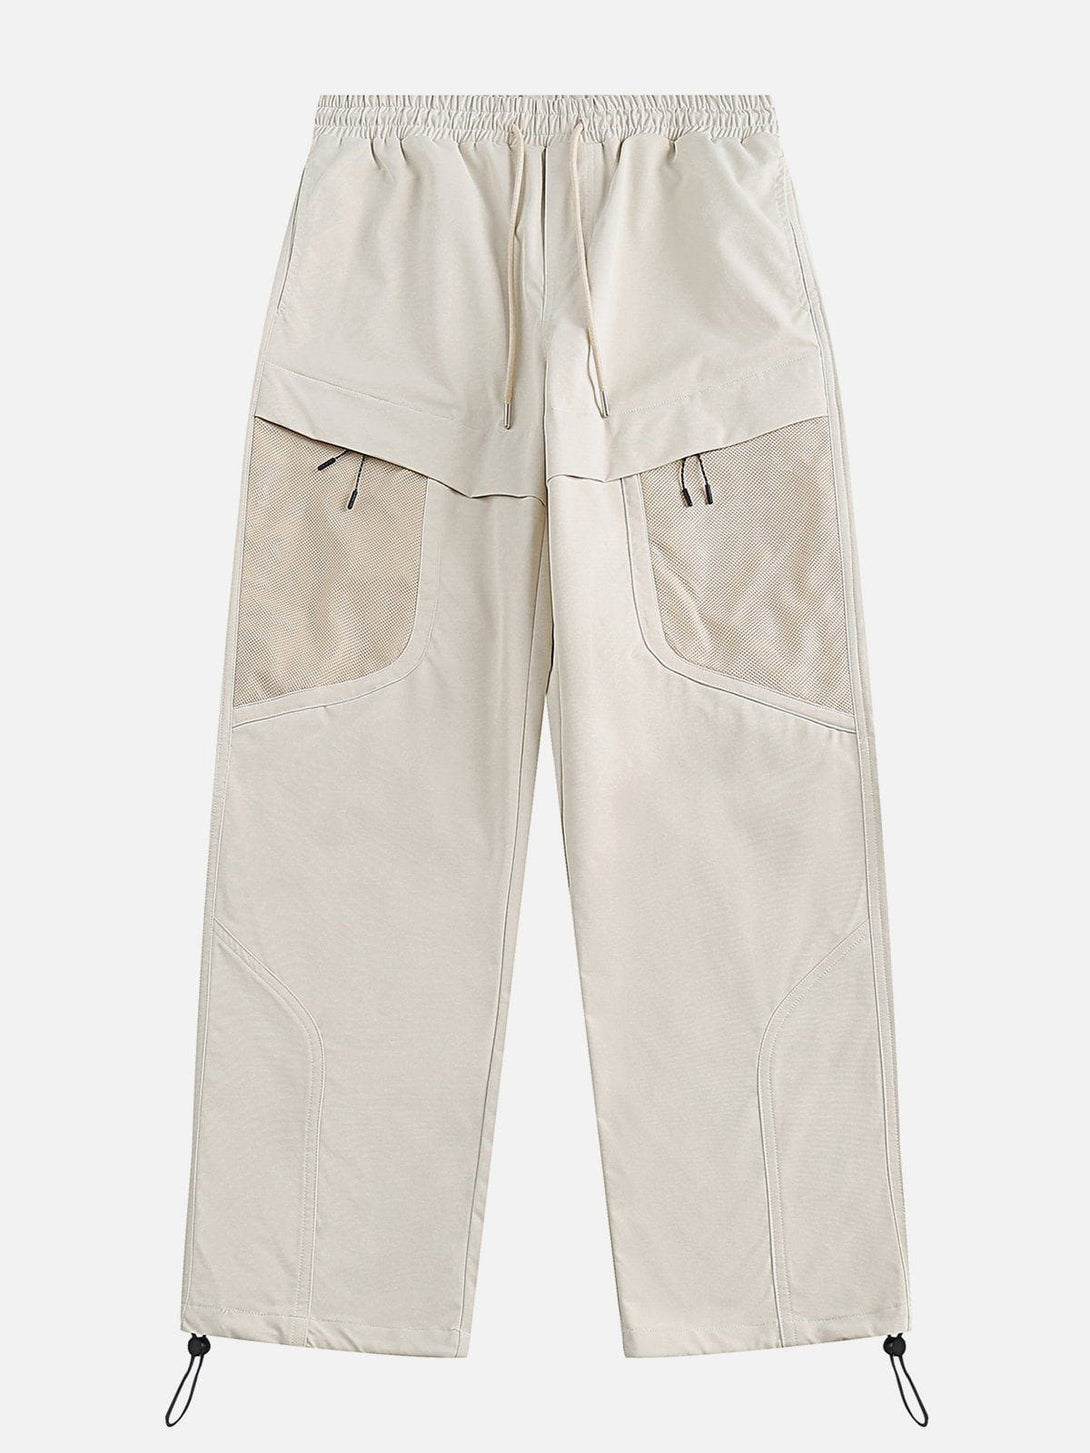 Majesda® - Mesh Pocket Cargo Pants outfit ideas streetwear fashion